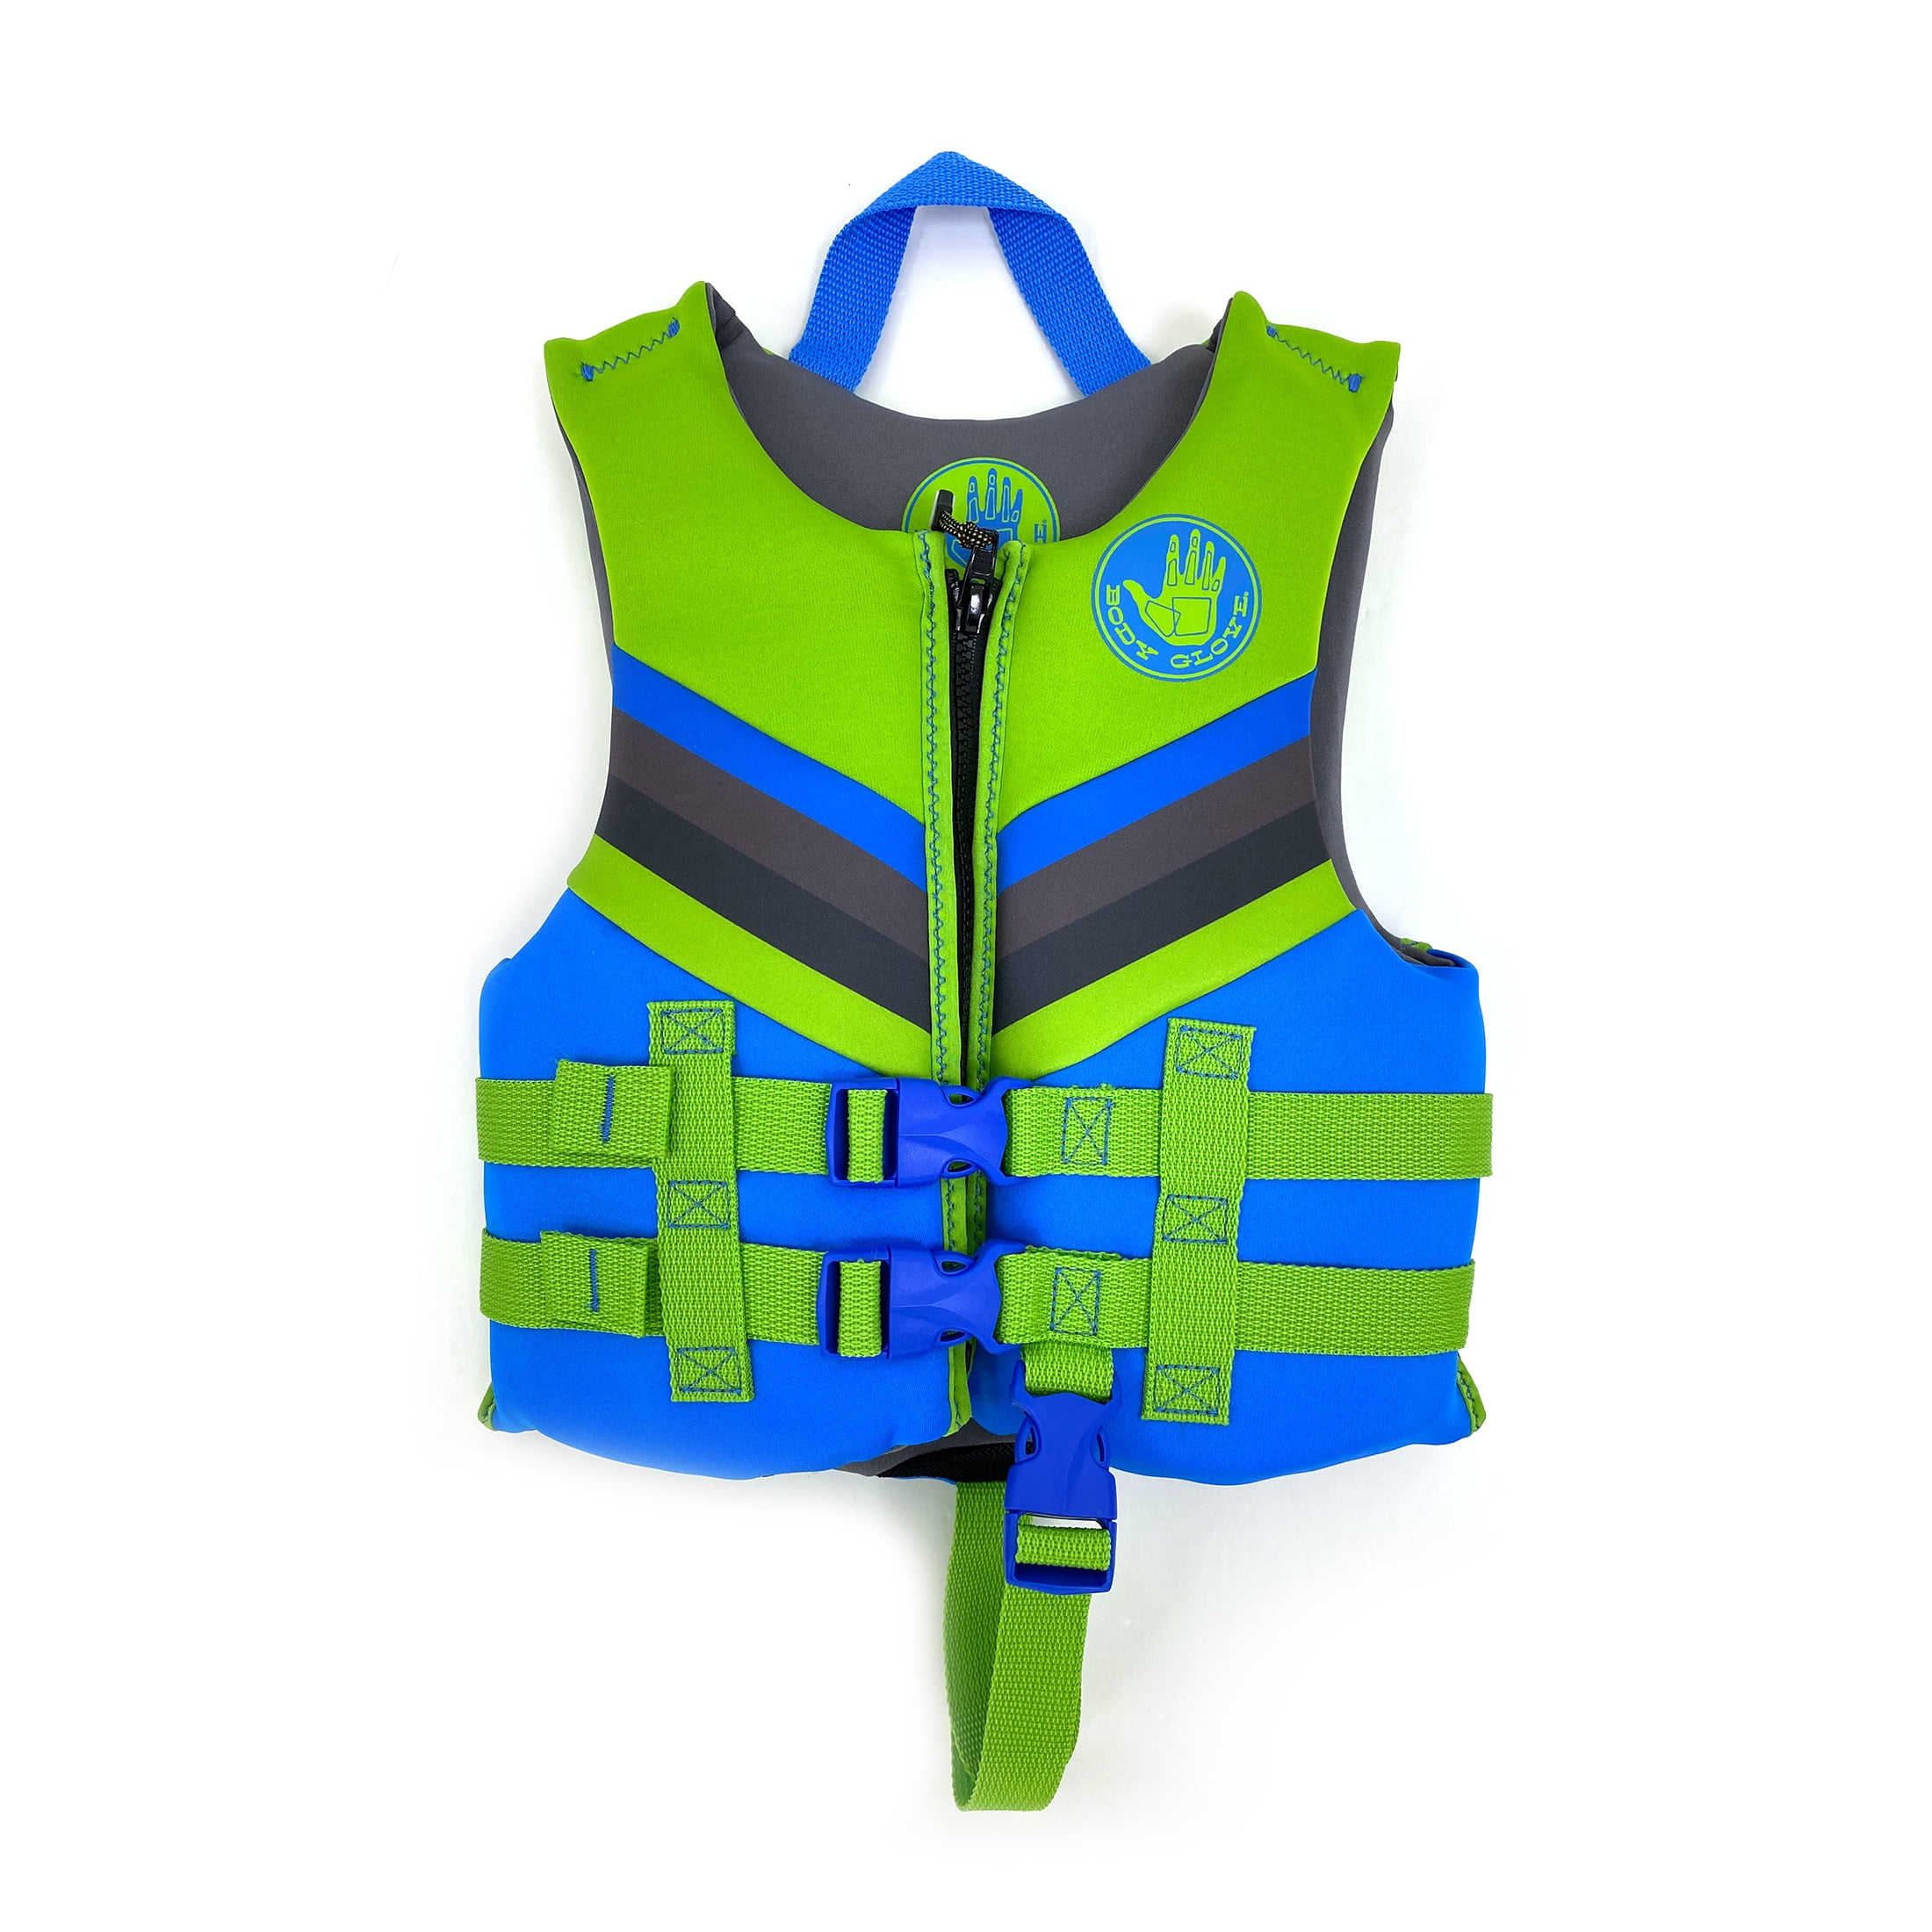 KIDS Boy LIFE JACKETS SWIMMING Floating Swim Zip Batman Vest Buoyancy Aid Jacket 